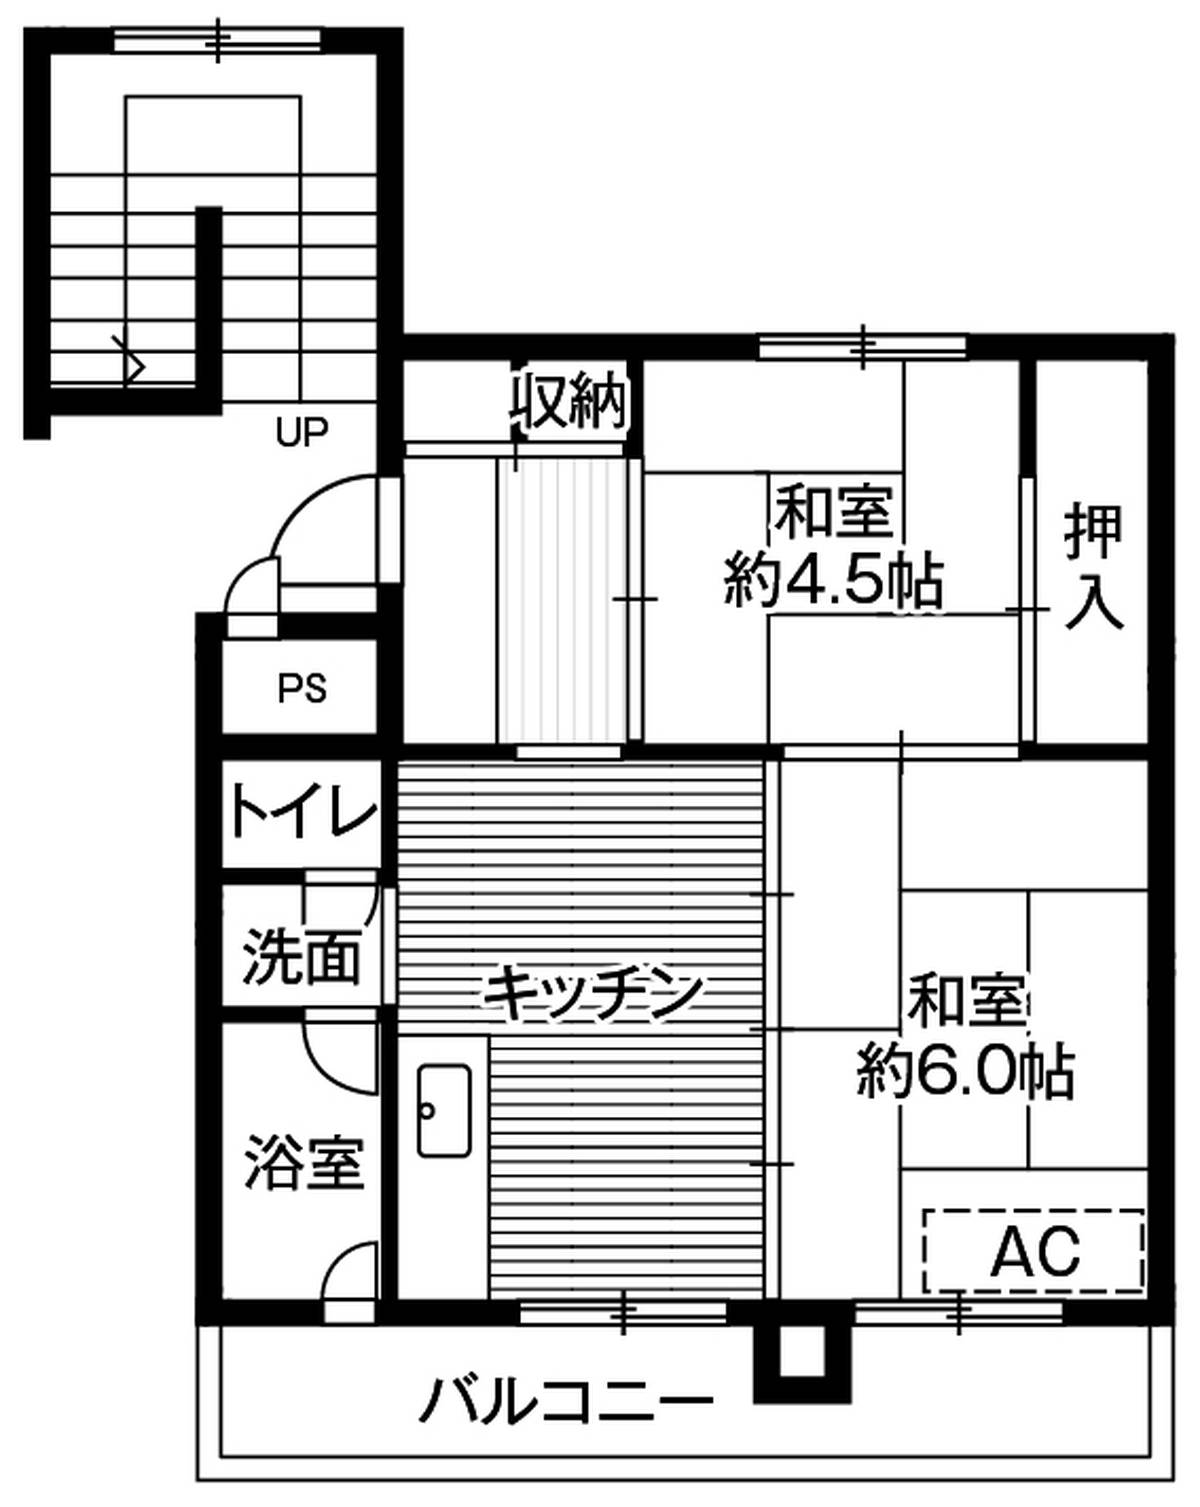 2DK floorplan of Village House Shin Chioda in Yubari-shi